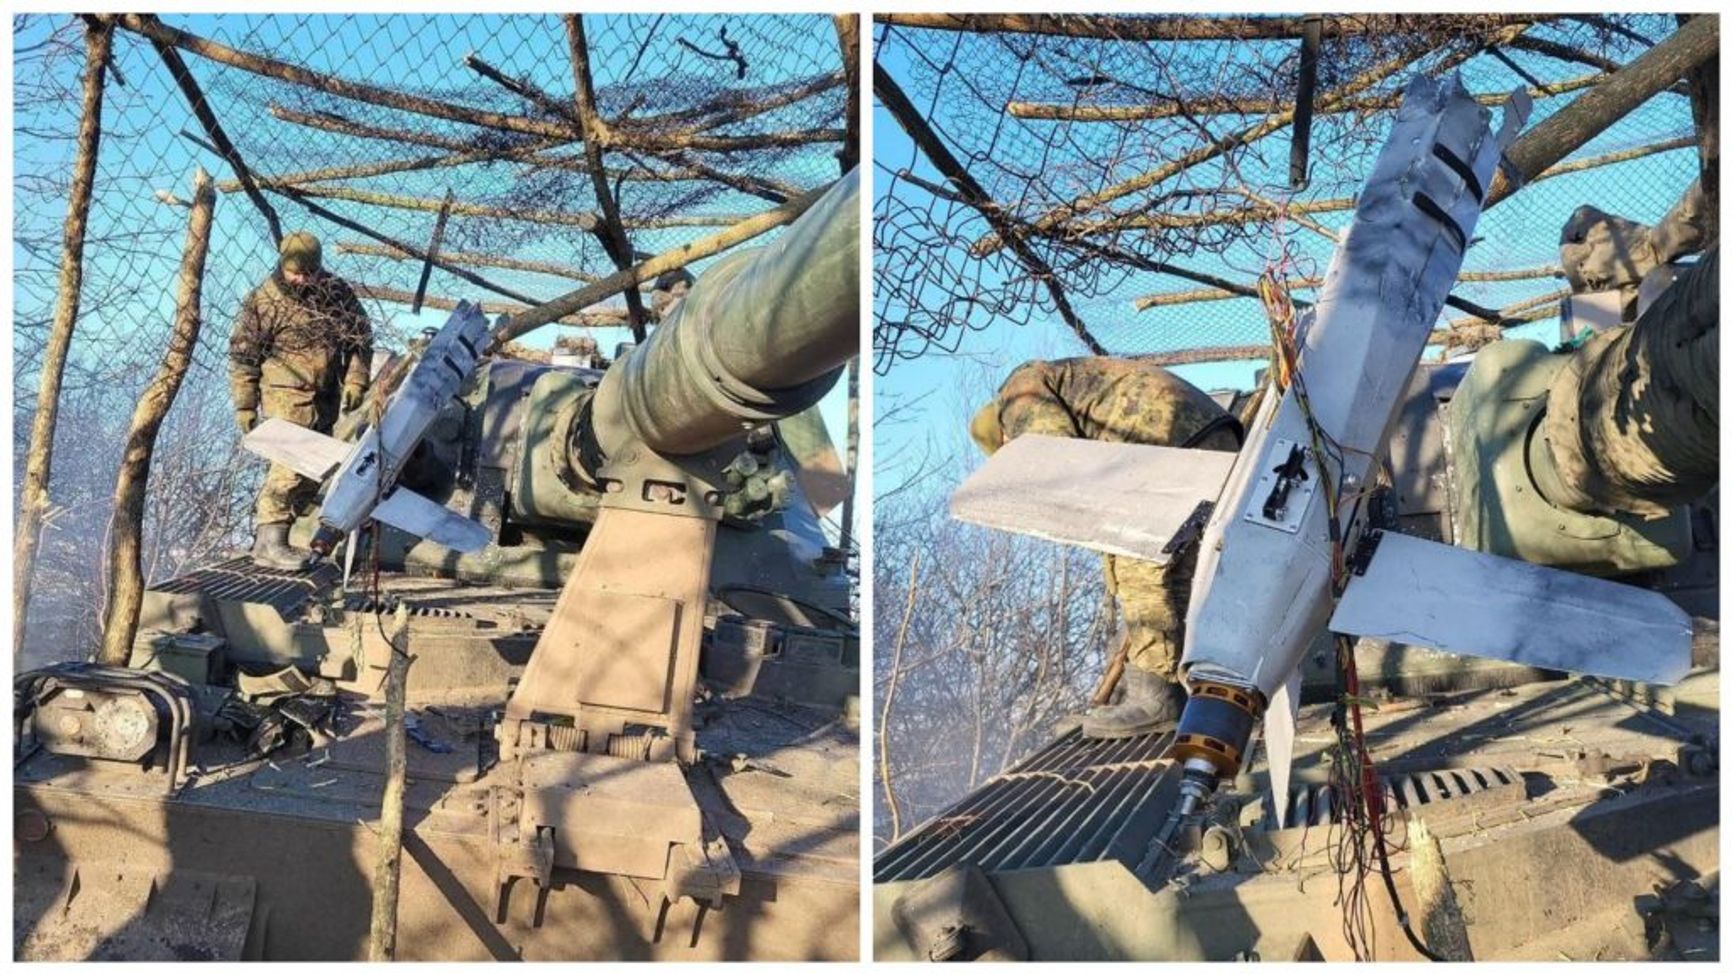 A Russian Lancet loitering munition stuck in a metal net deployed over a Ukrainian military Krab ACS, January 2023, Ukraine